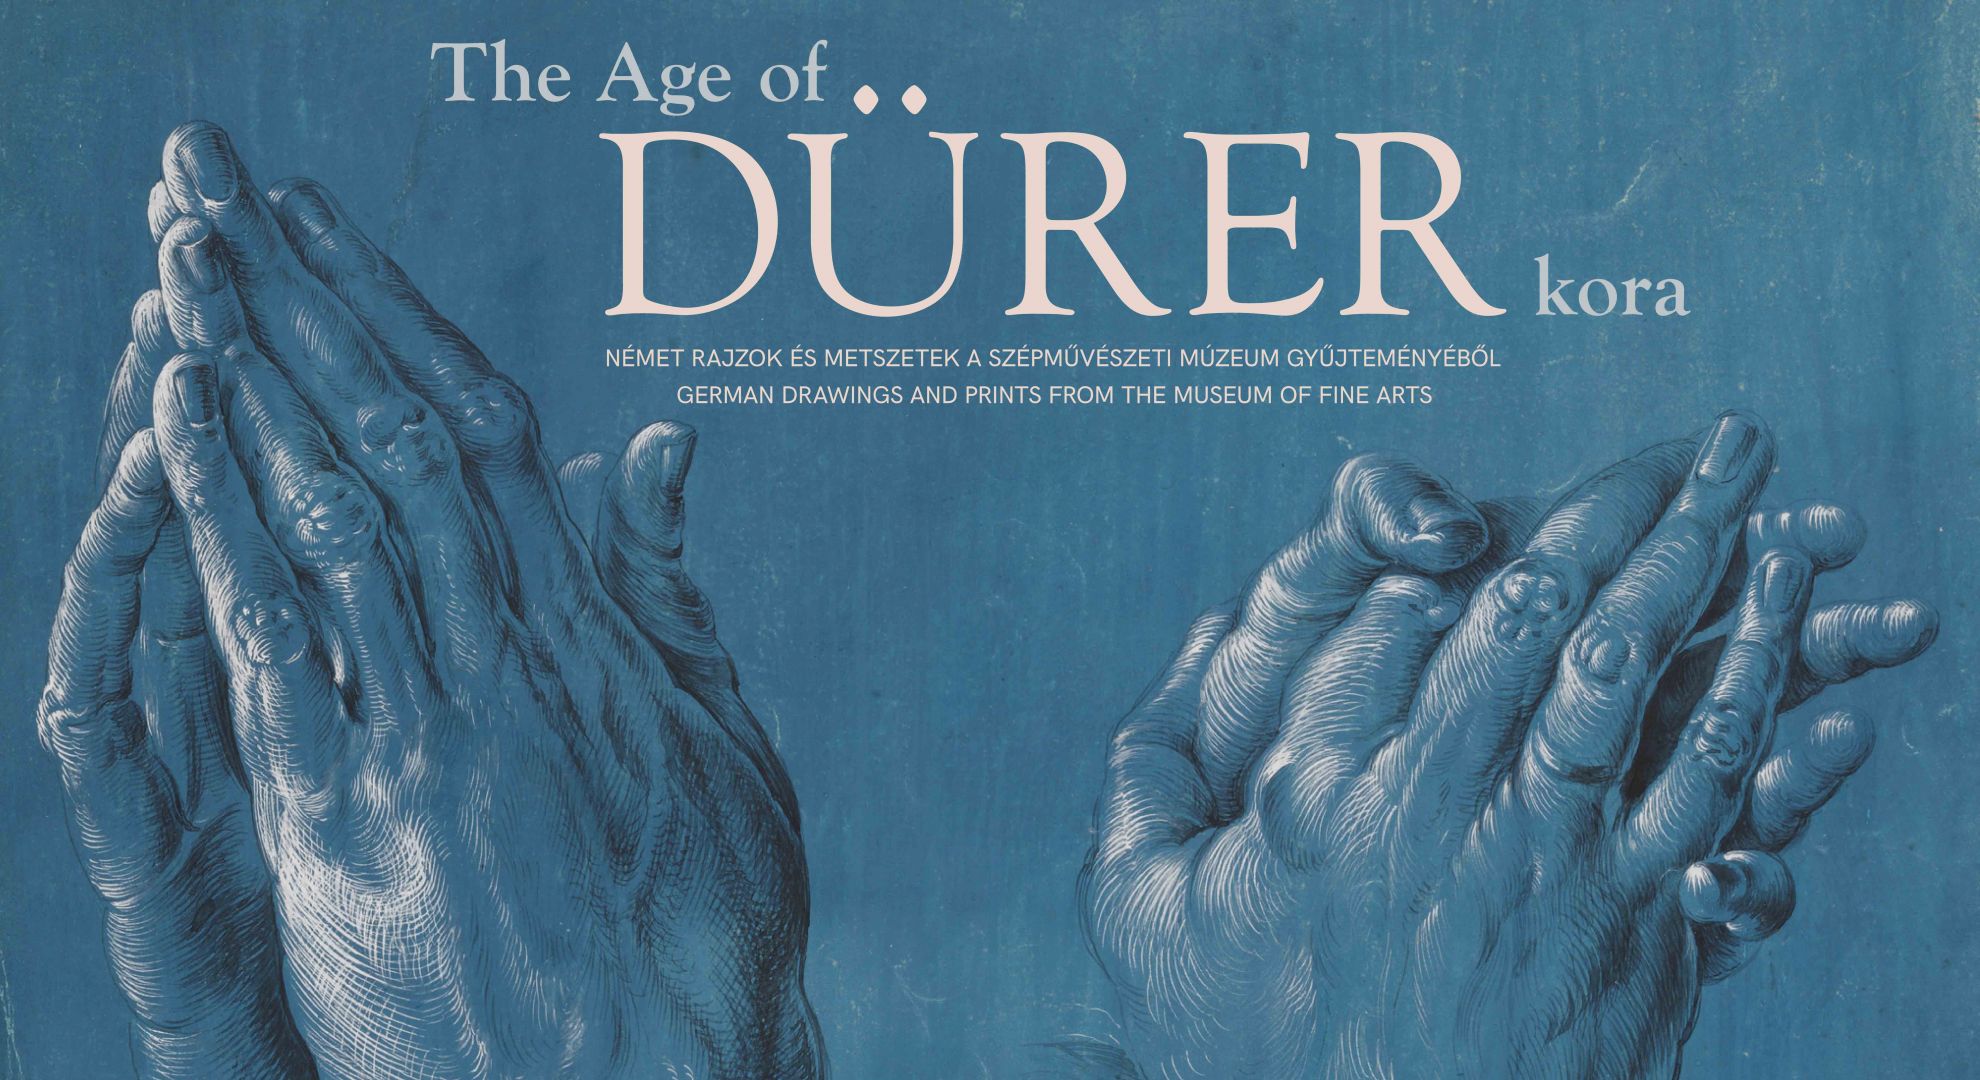 The Age of DÜRER